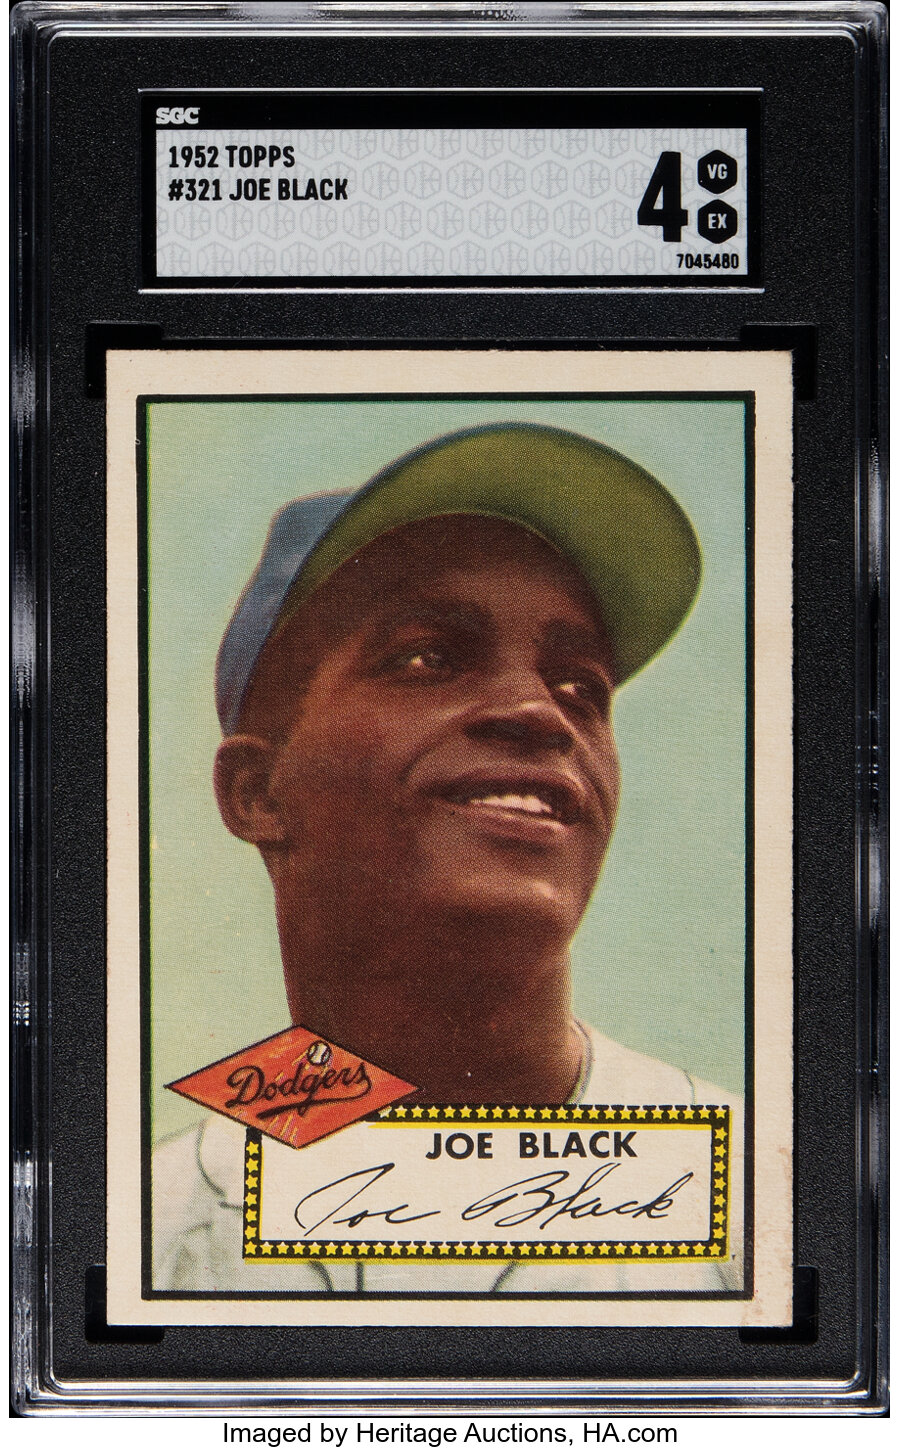 1952 Topps Joe Black Rookie #321 SGC VG/EX 4